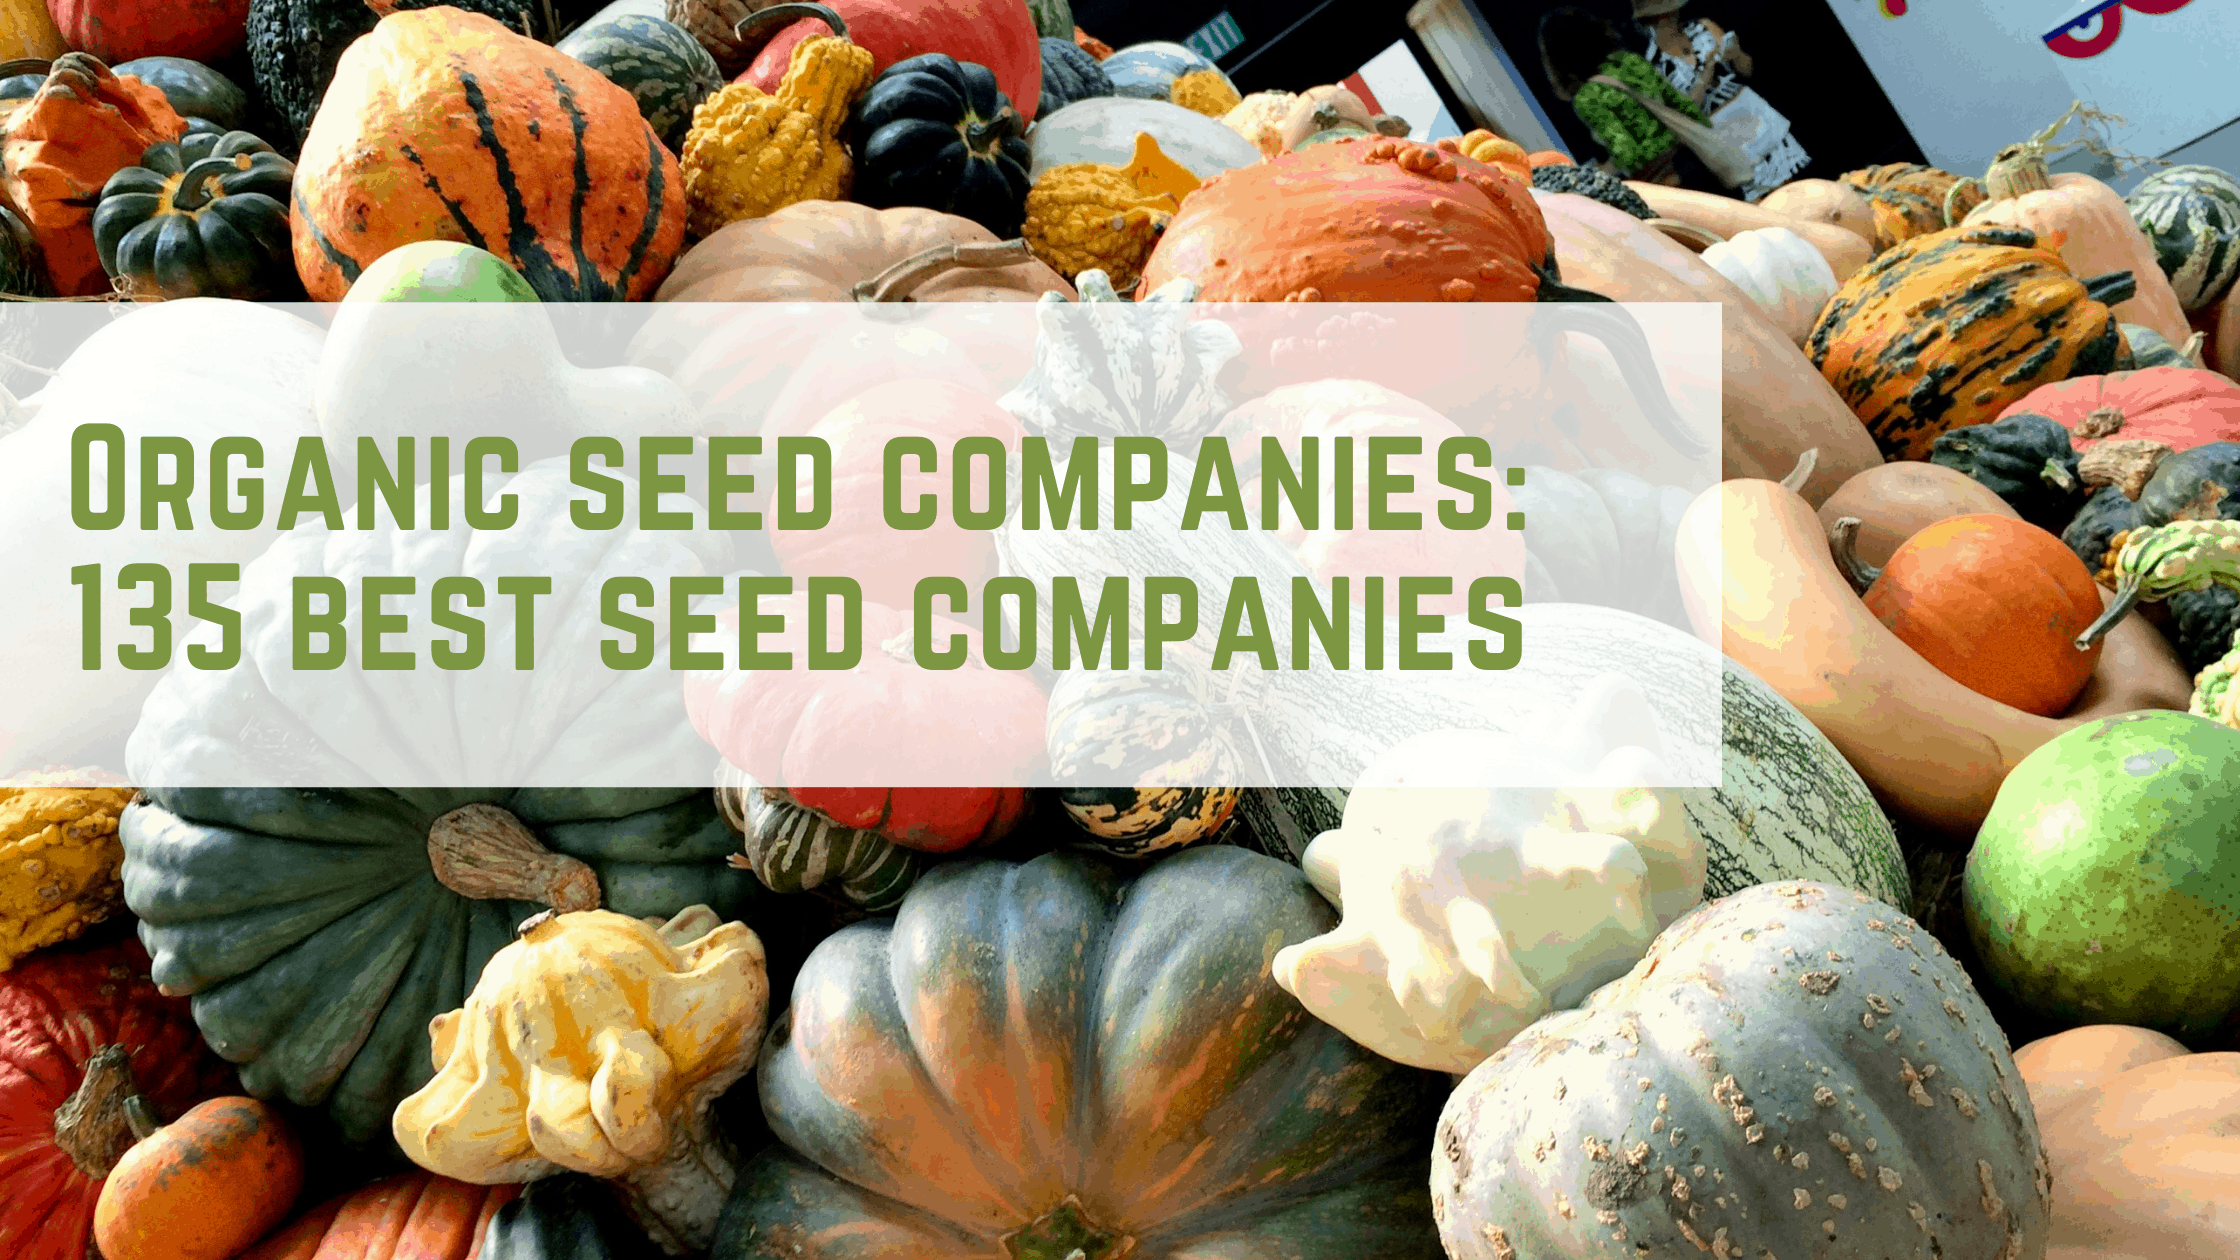 Organic seed companies 135 best seed companies Kami McBride